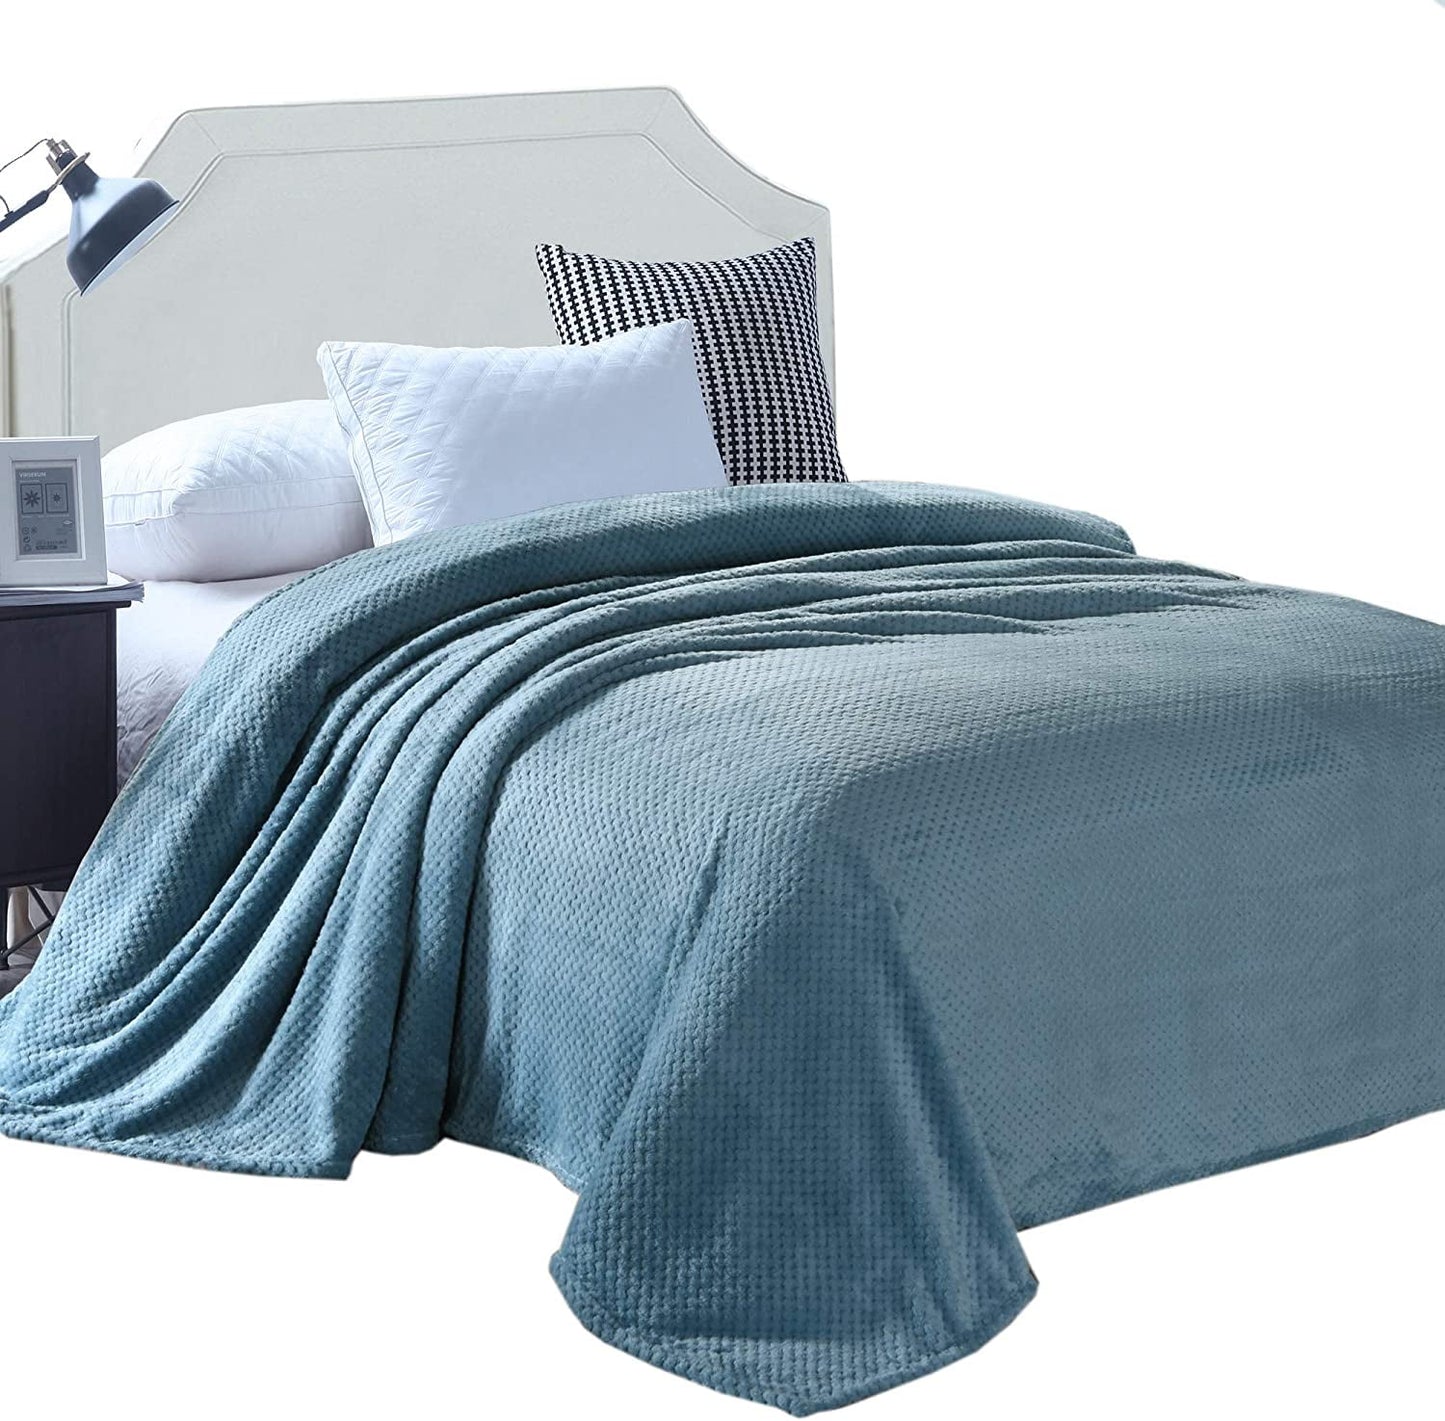 Exclusivo Mezcla Waffle Textured Soft Fleece Blanket,Twin Size Bed Blanket (Slate Blue,90x66 inch)-Cozy,Warm and Lightweight